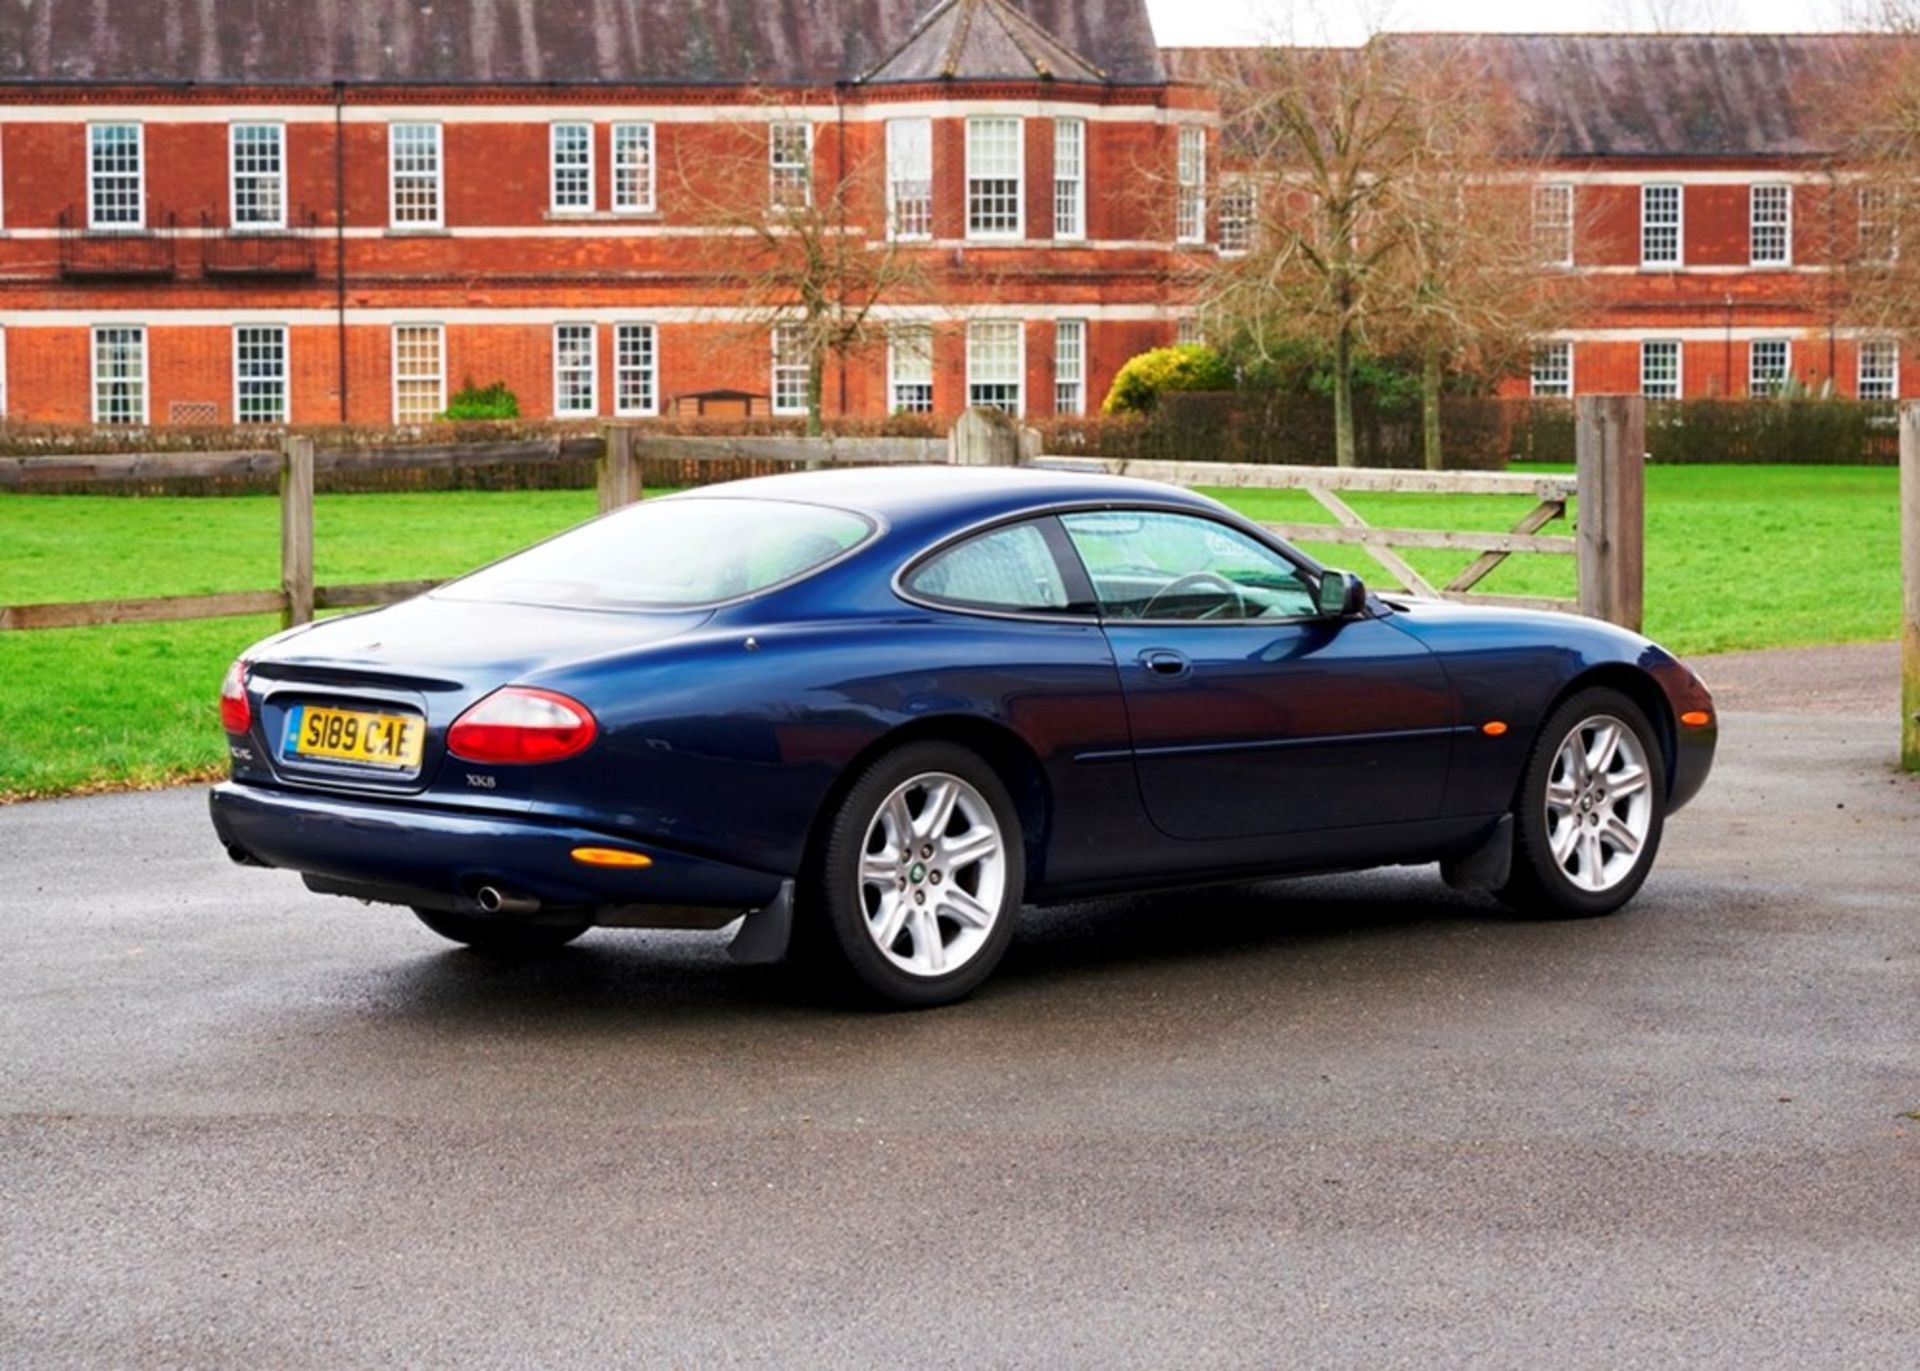 1998 Jaguar XK8 Coupé - Image 5 of 9